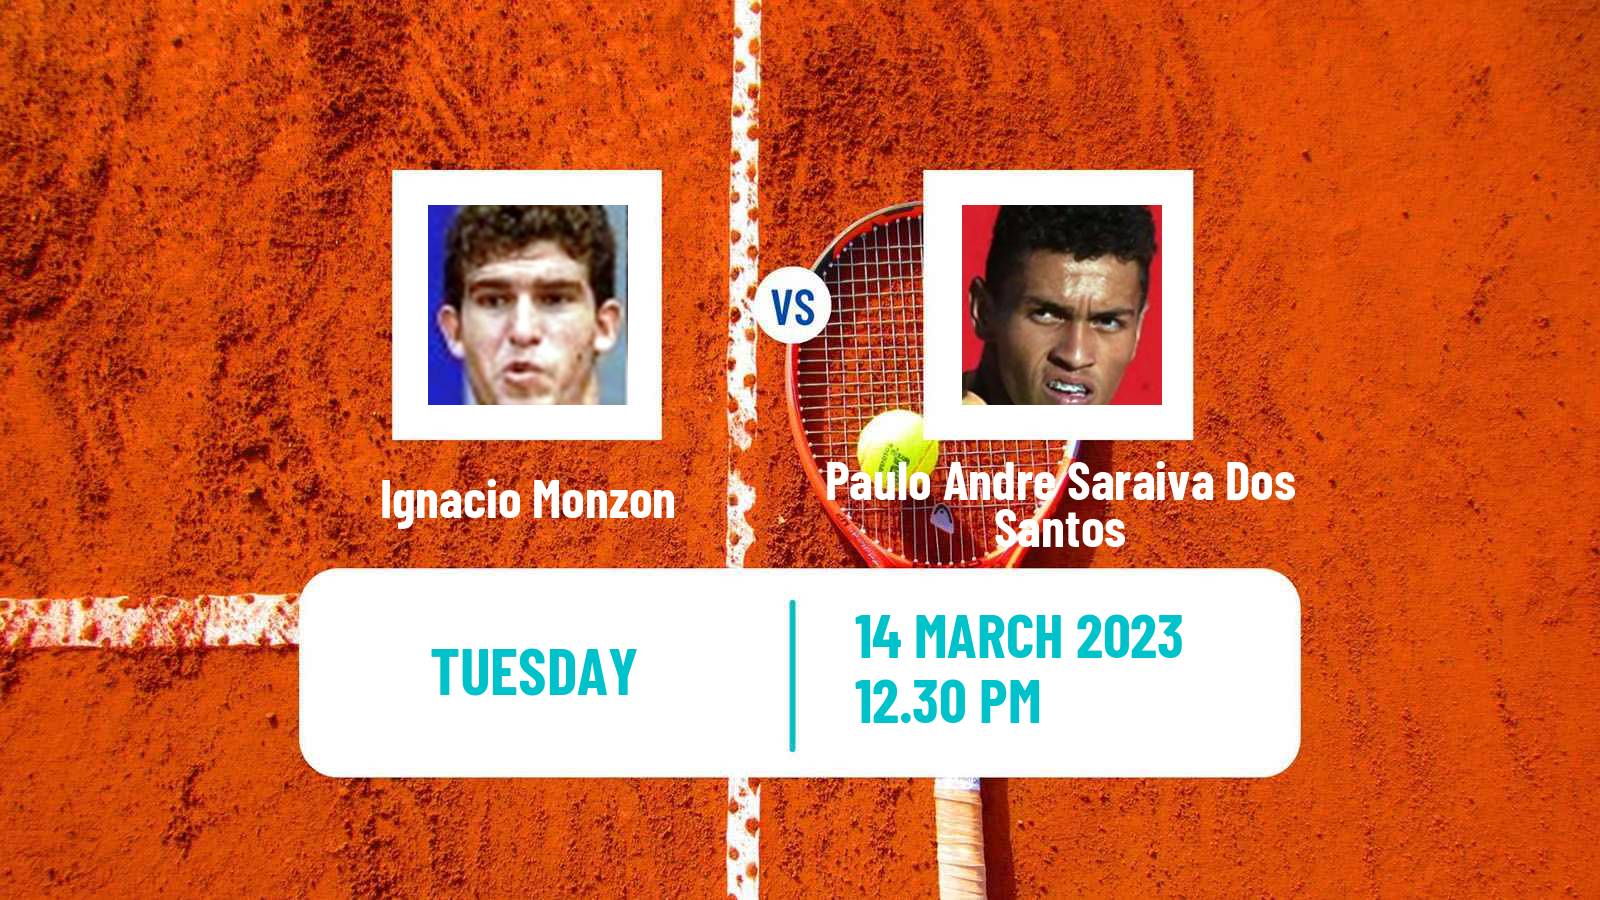 Tennis ITF Tournaments Ignacio Monzon - Paulo Andre Saraiva Dos Santos